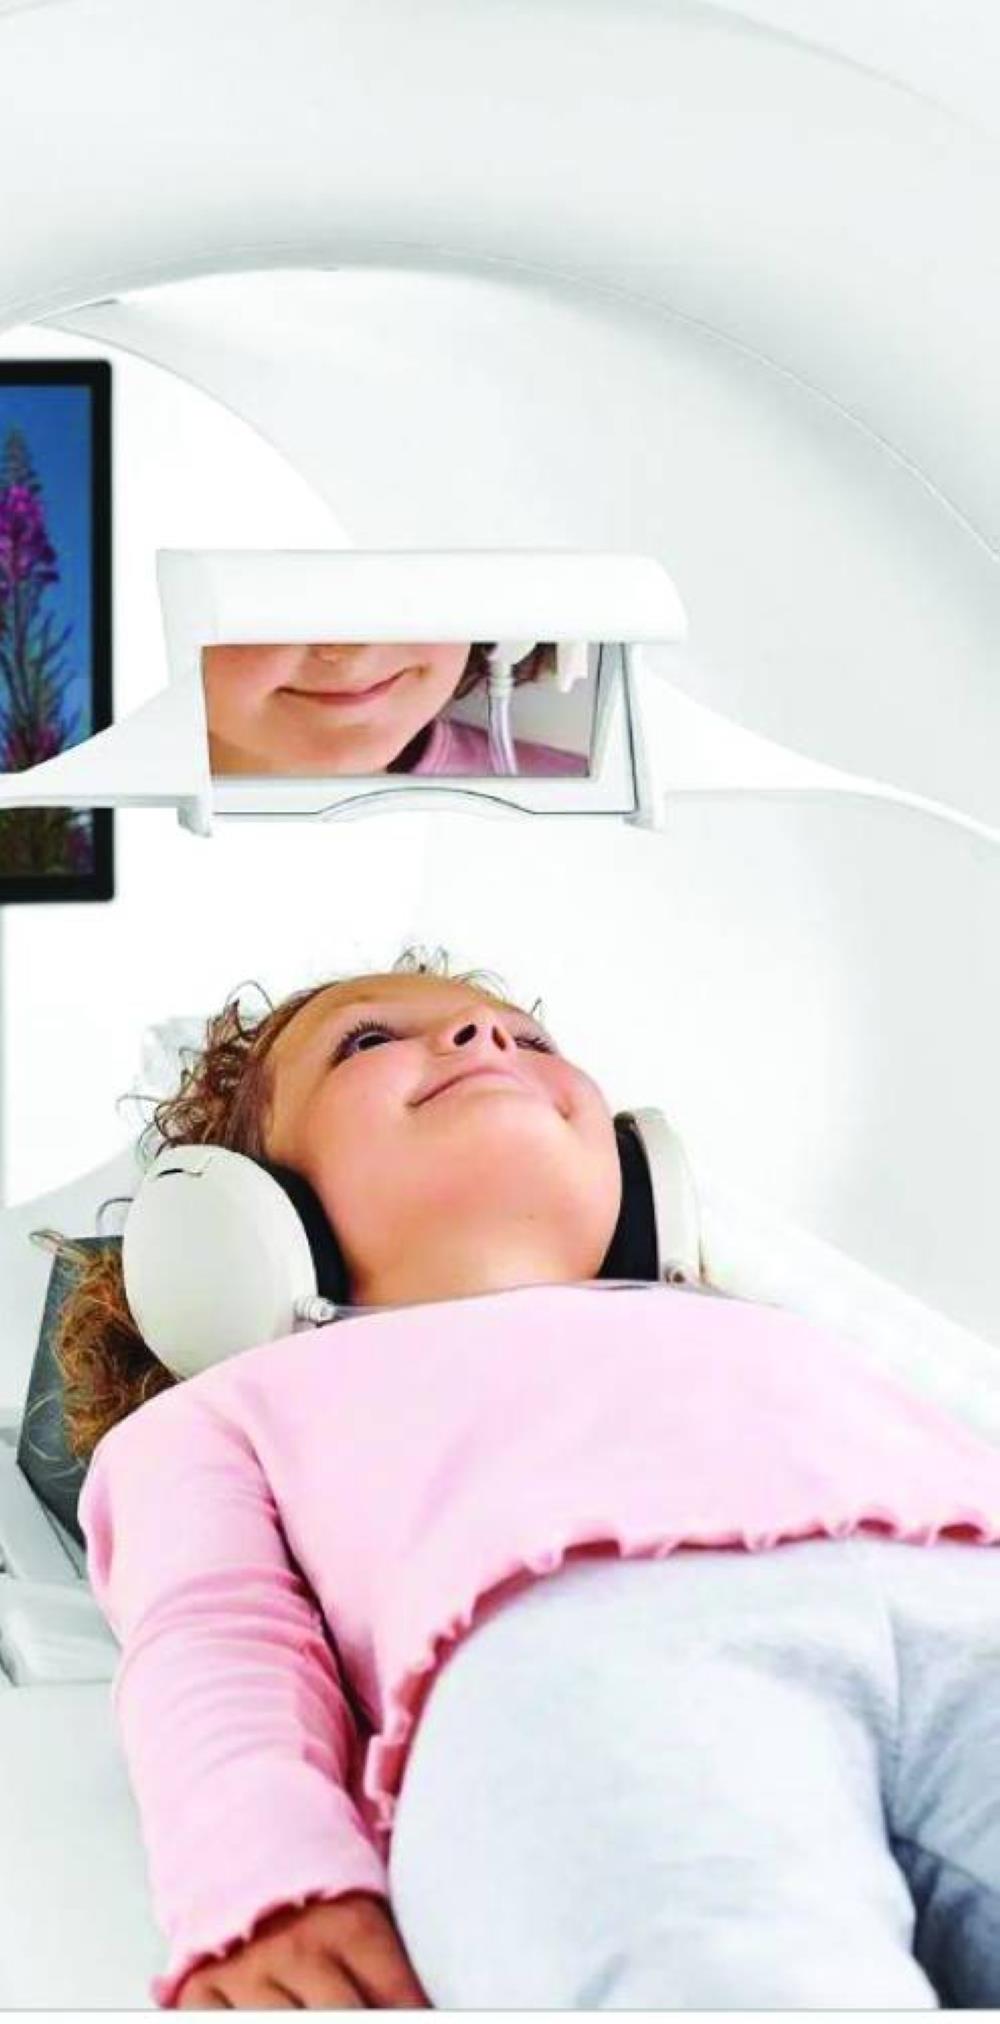 HMC Launches Advanced Entertainment Technology For Patients Undergoing MRI